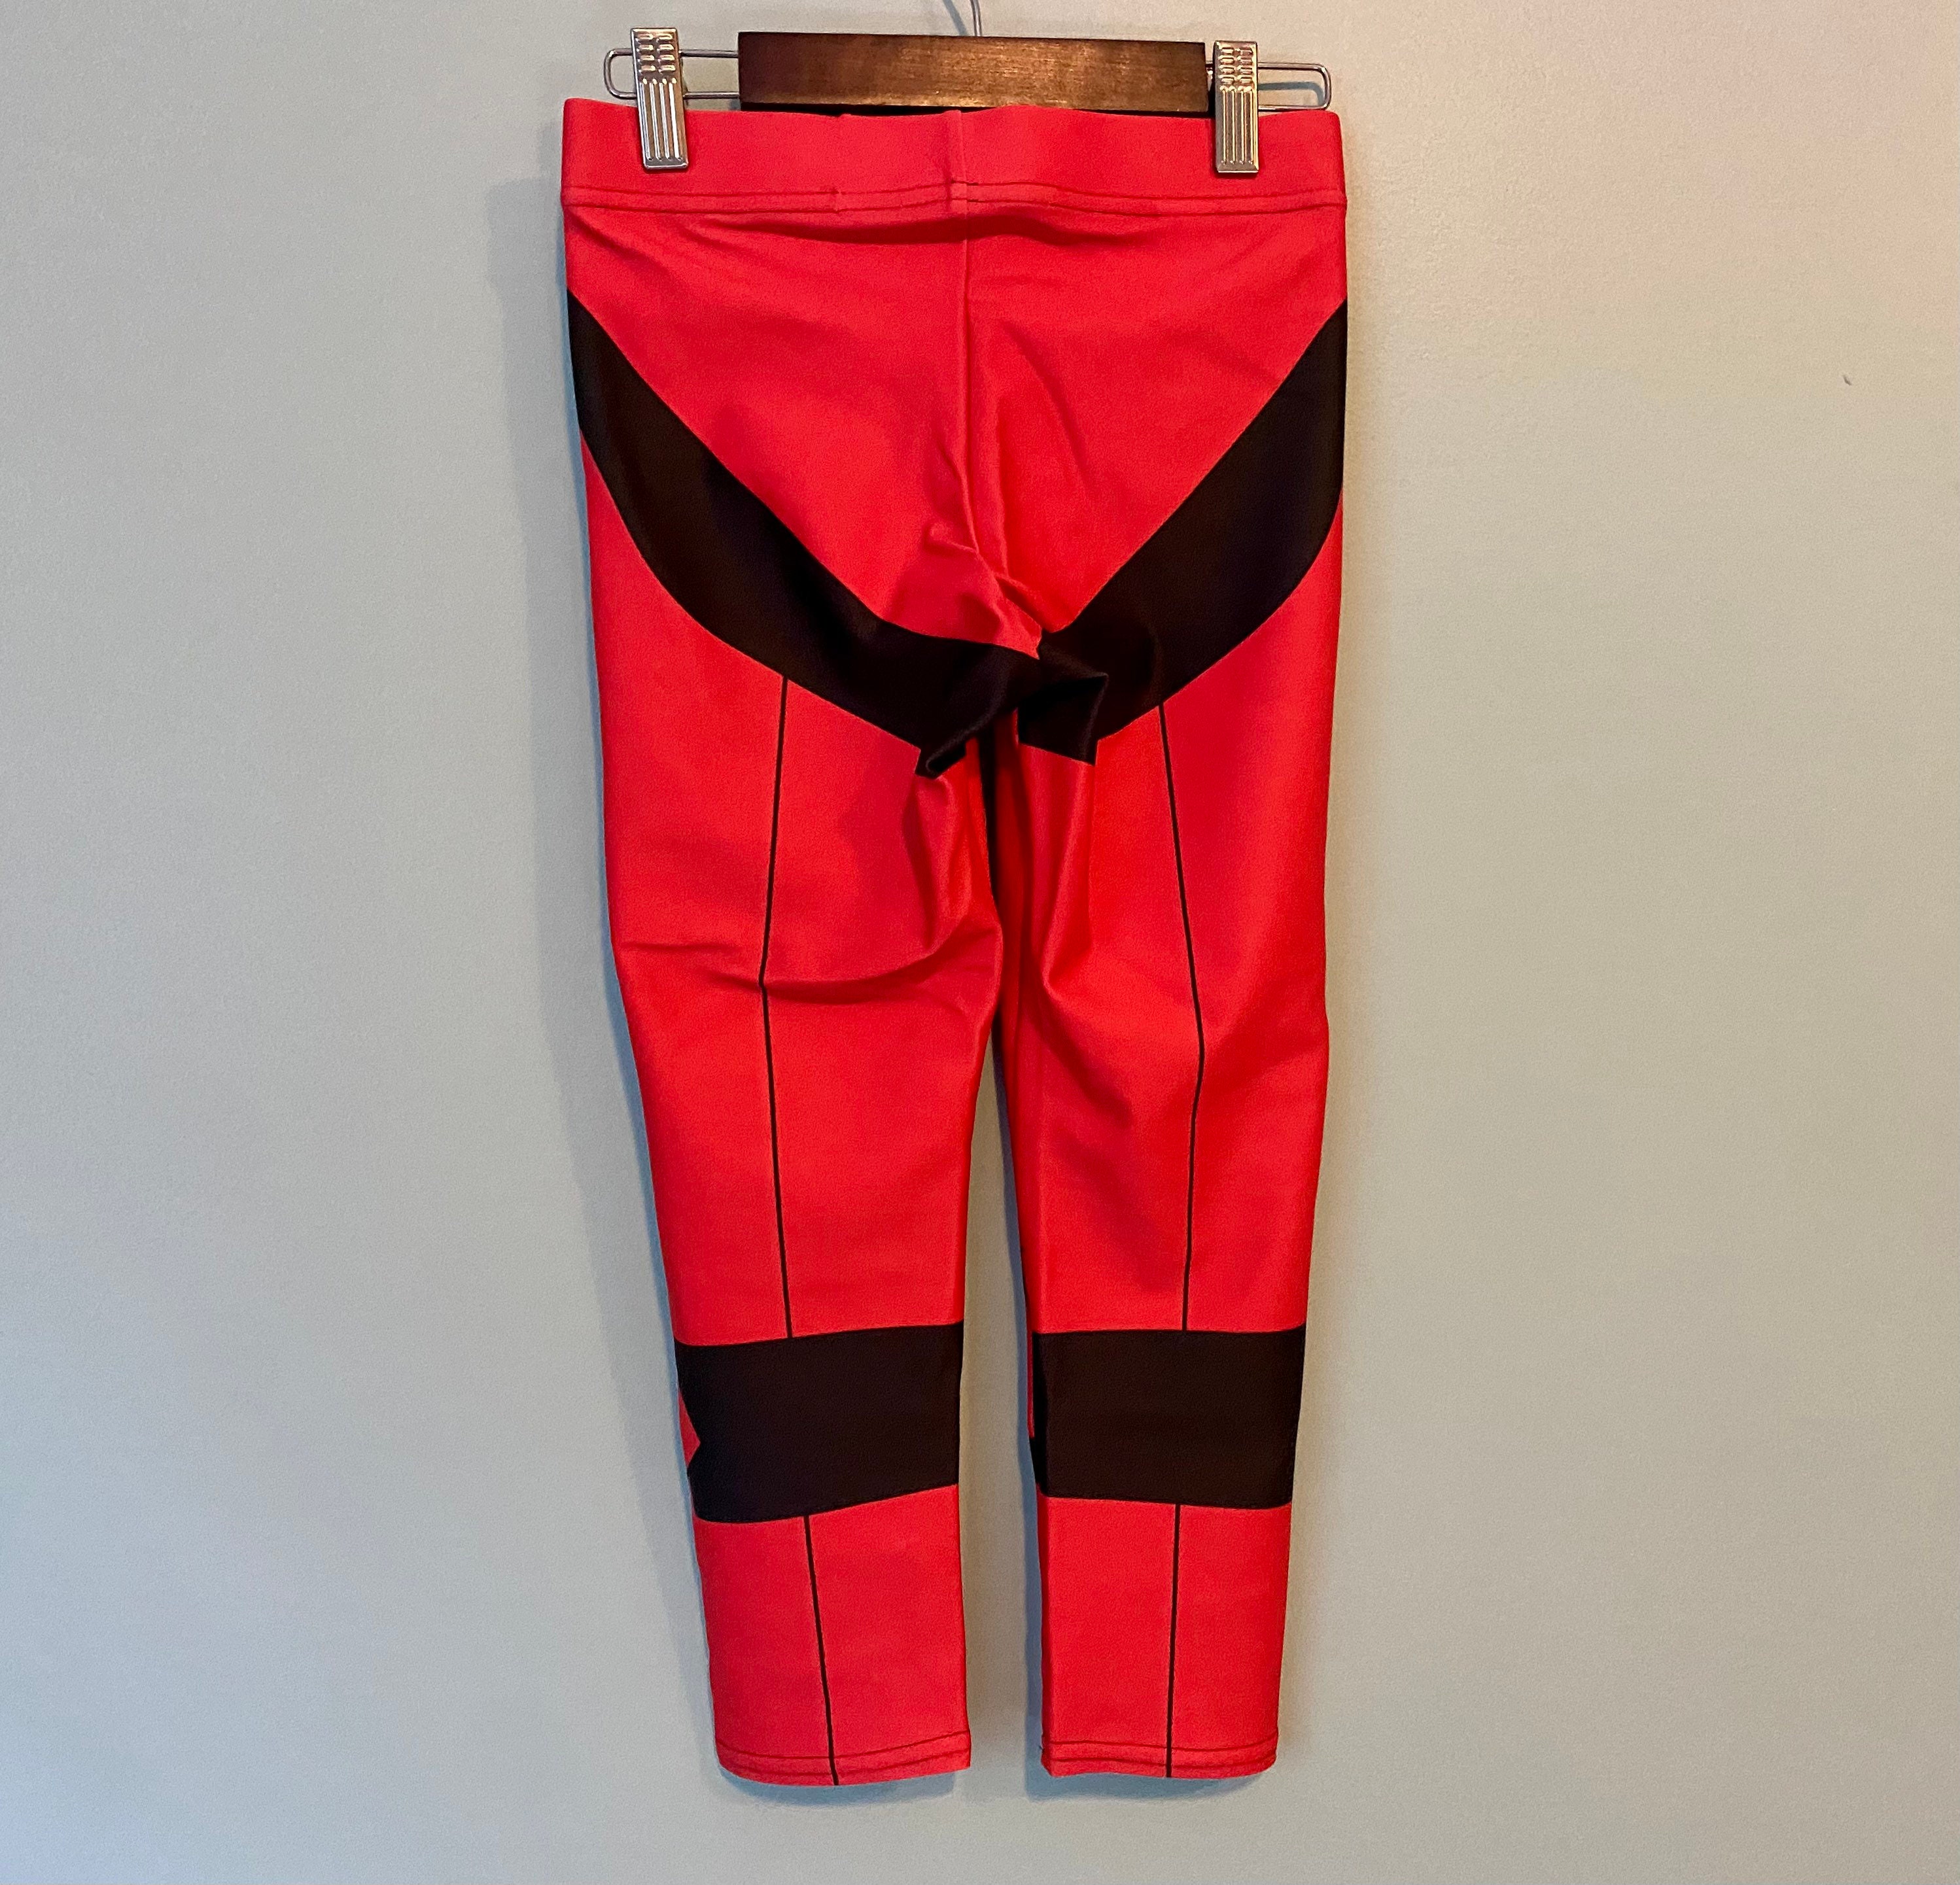 Red Dark Side Guard Running Costume Capri Leggings